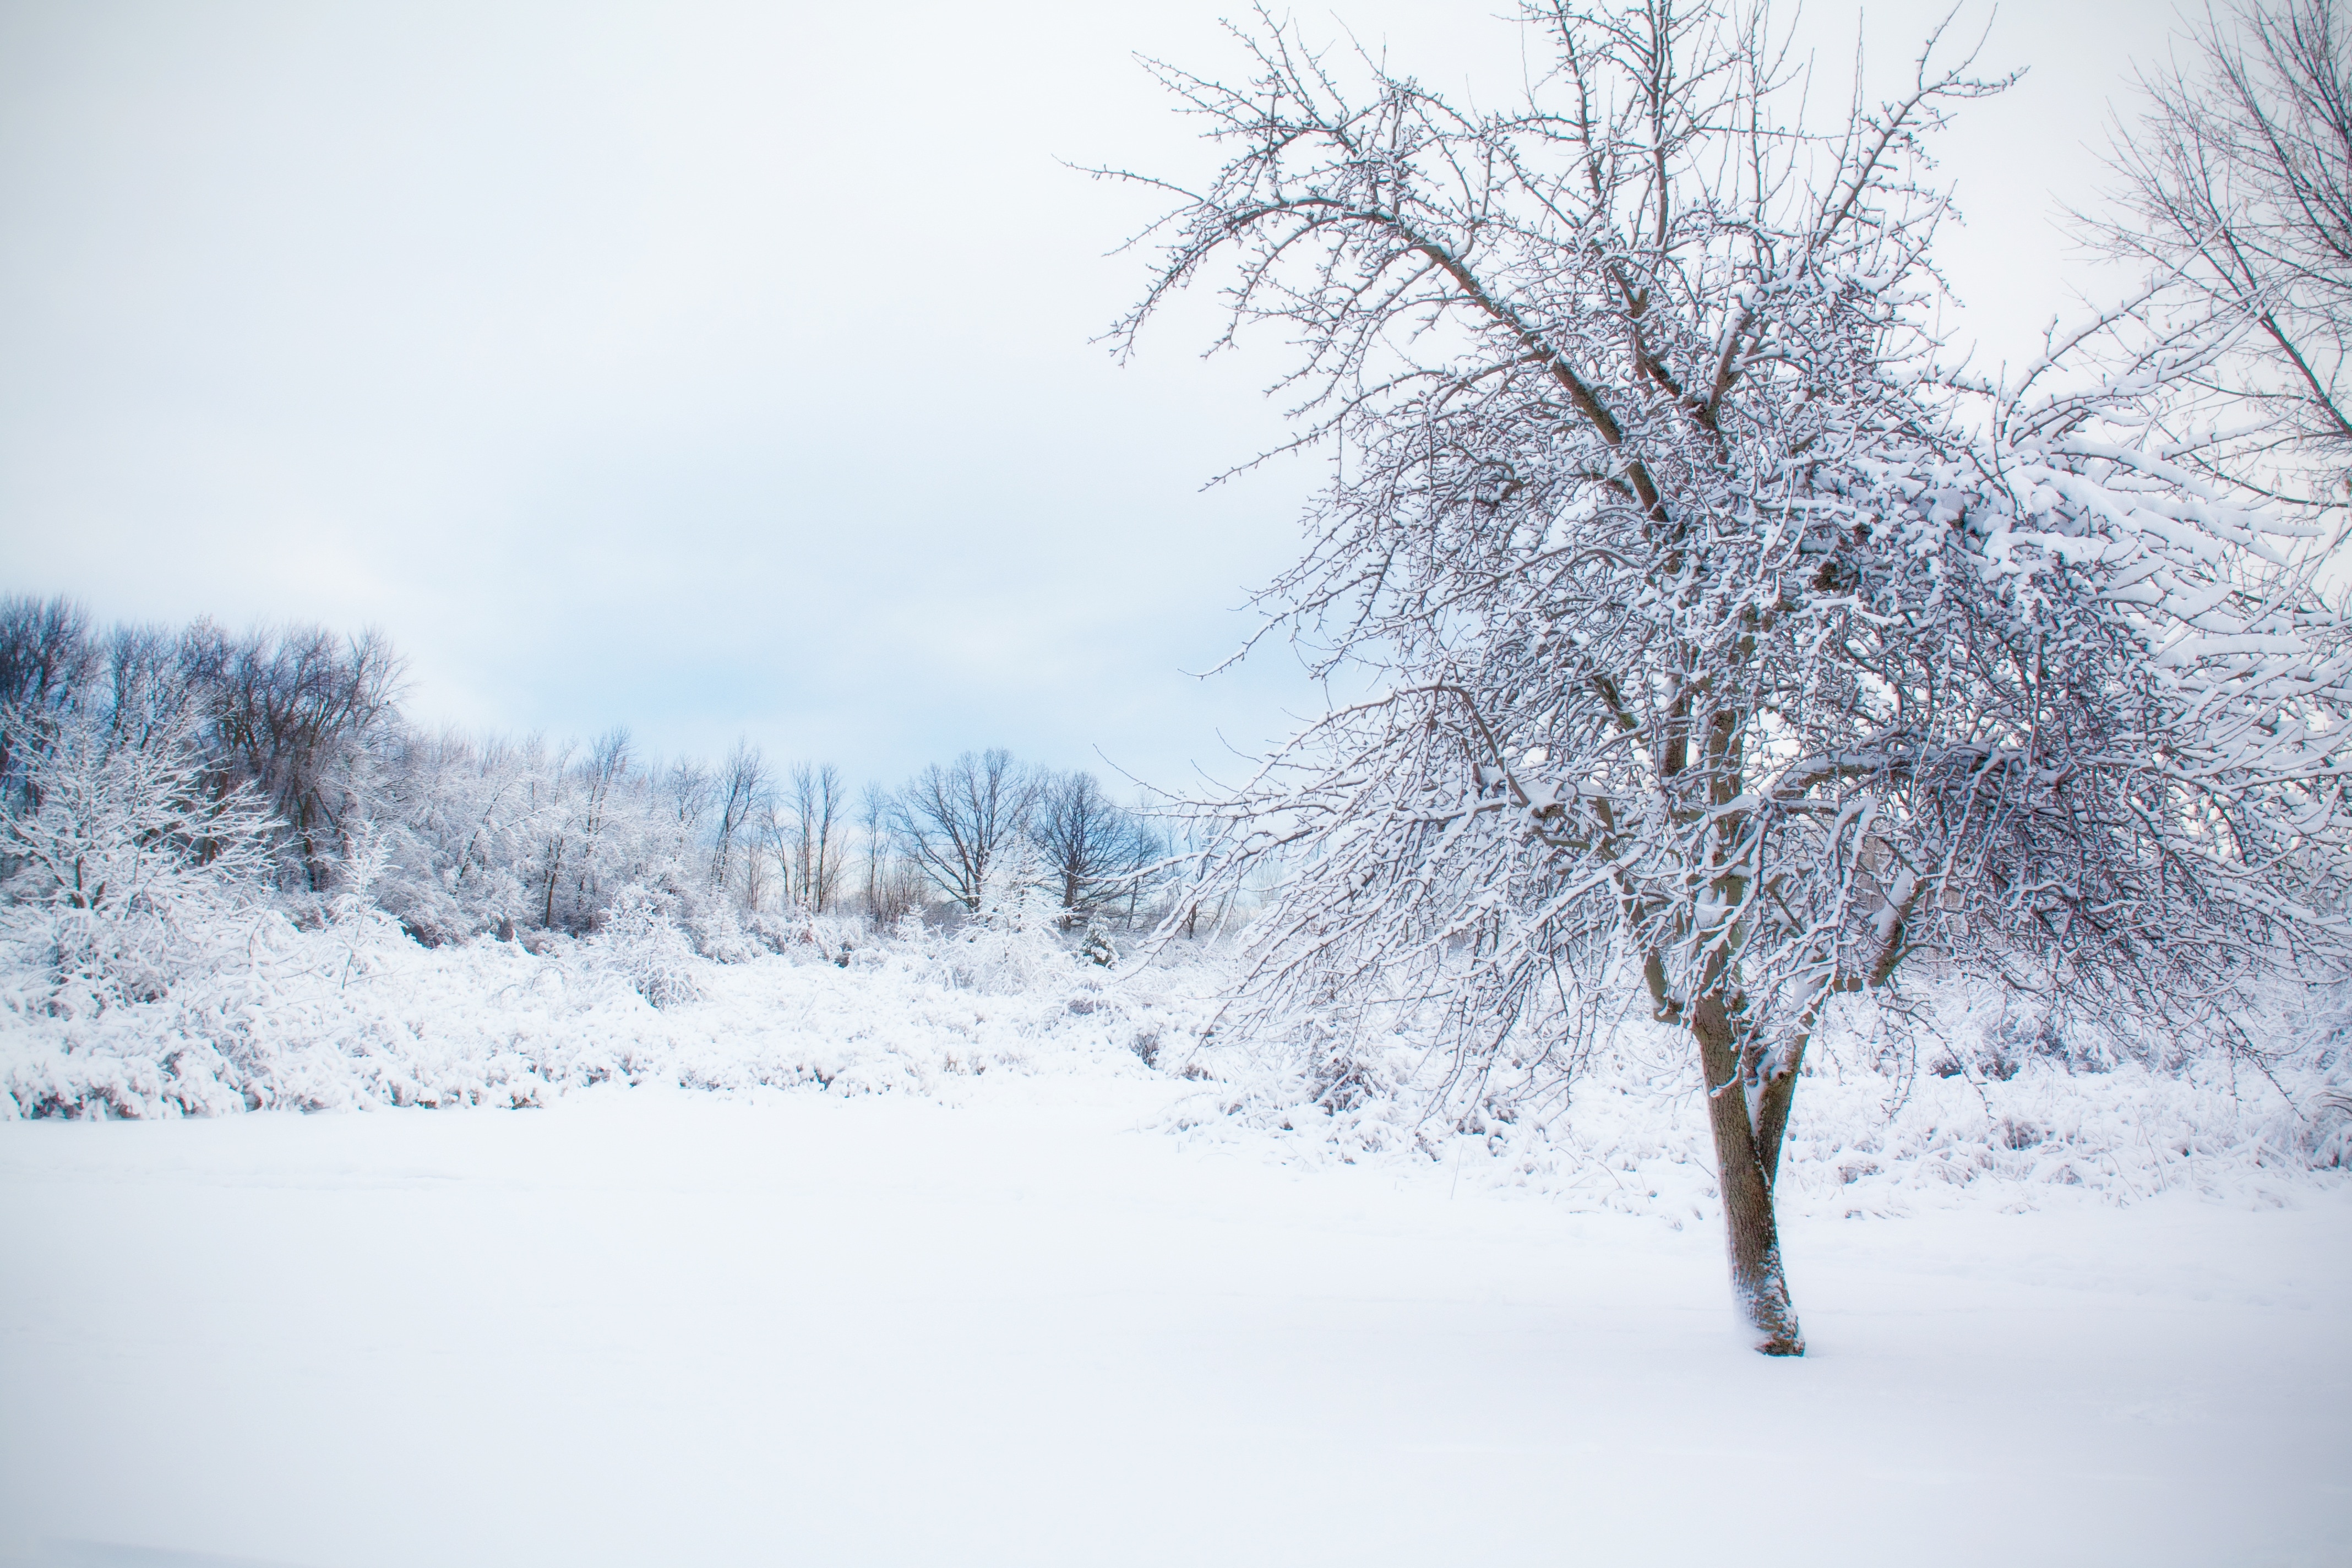 snow coated tree